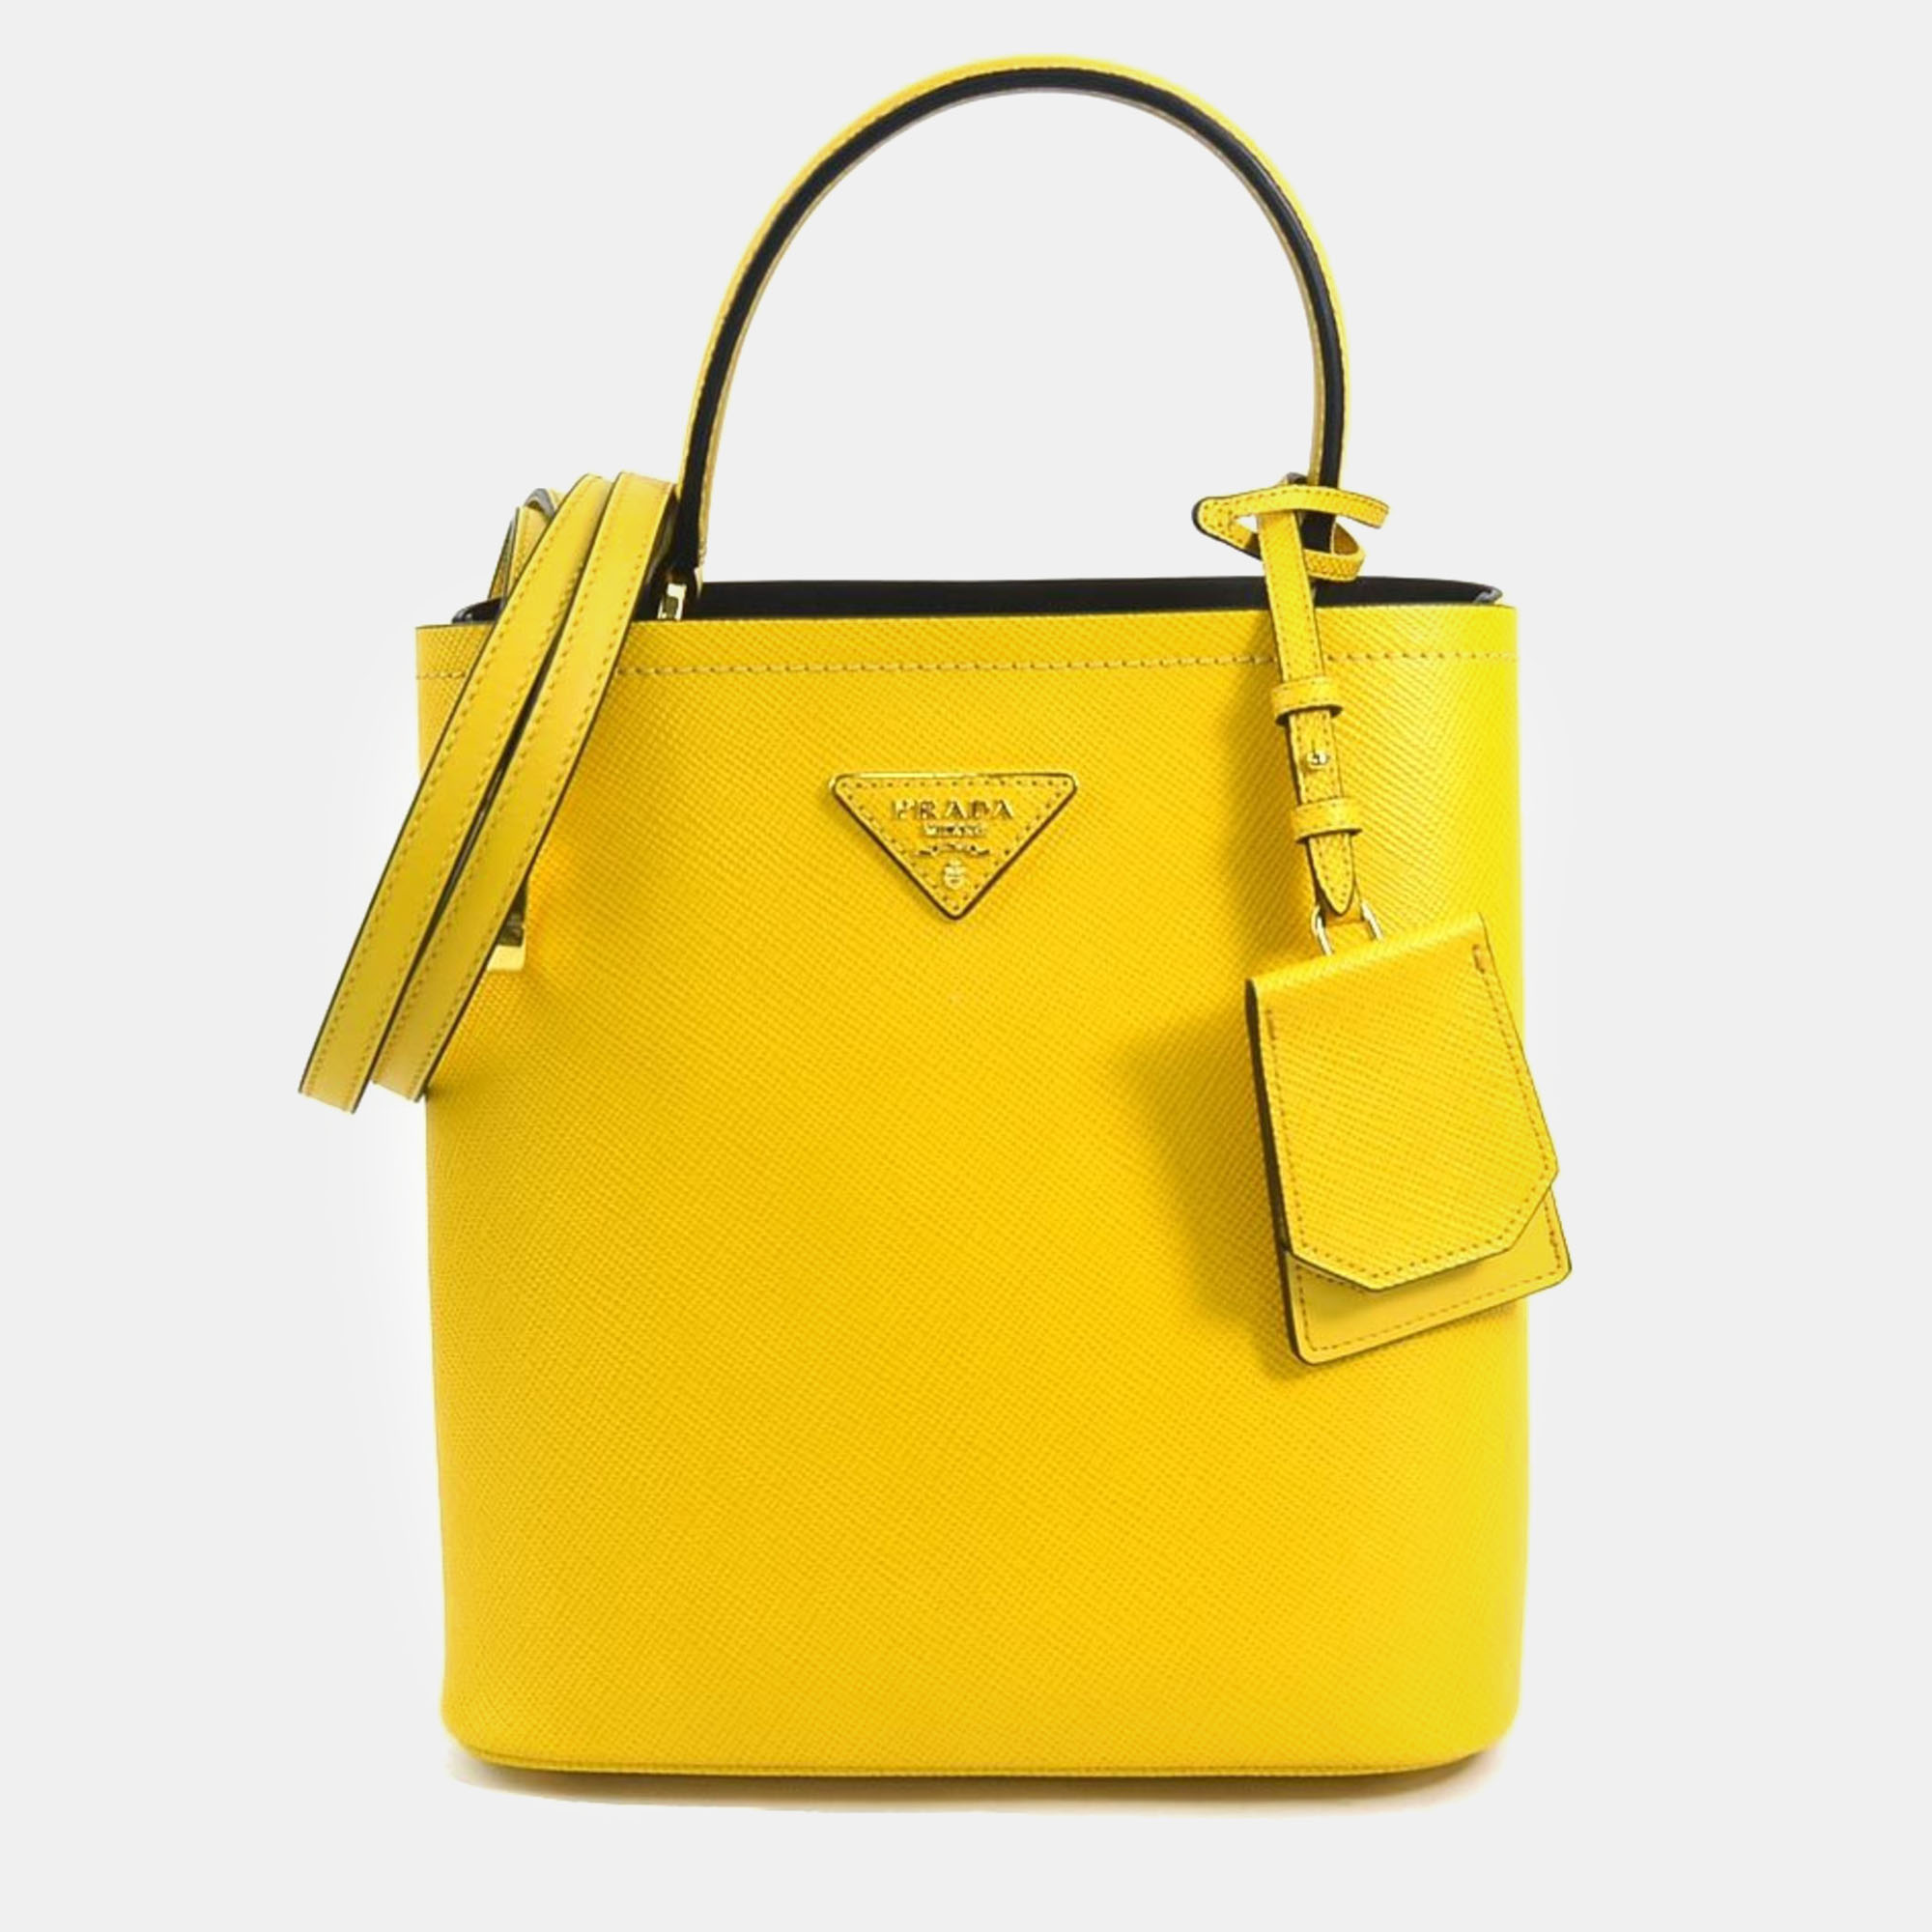 Prada yellow saffiano leather cuir small panier handbag